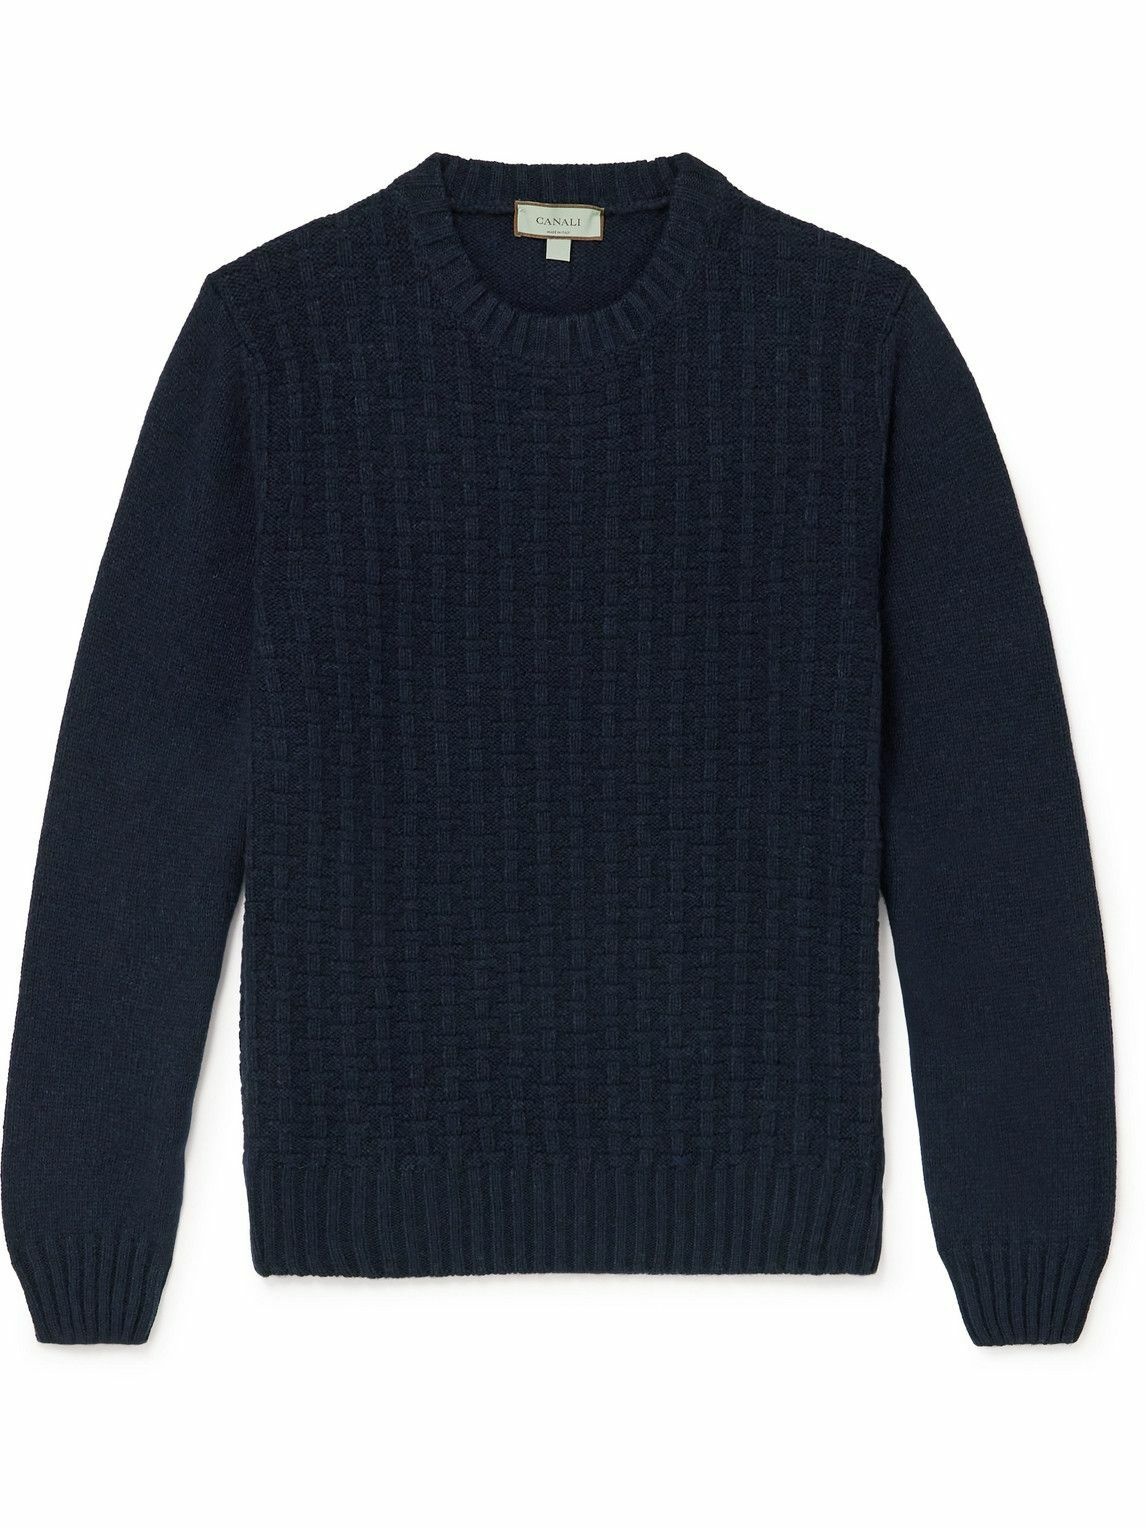 Canali - Wool-Blend Sweater - Blue Canali